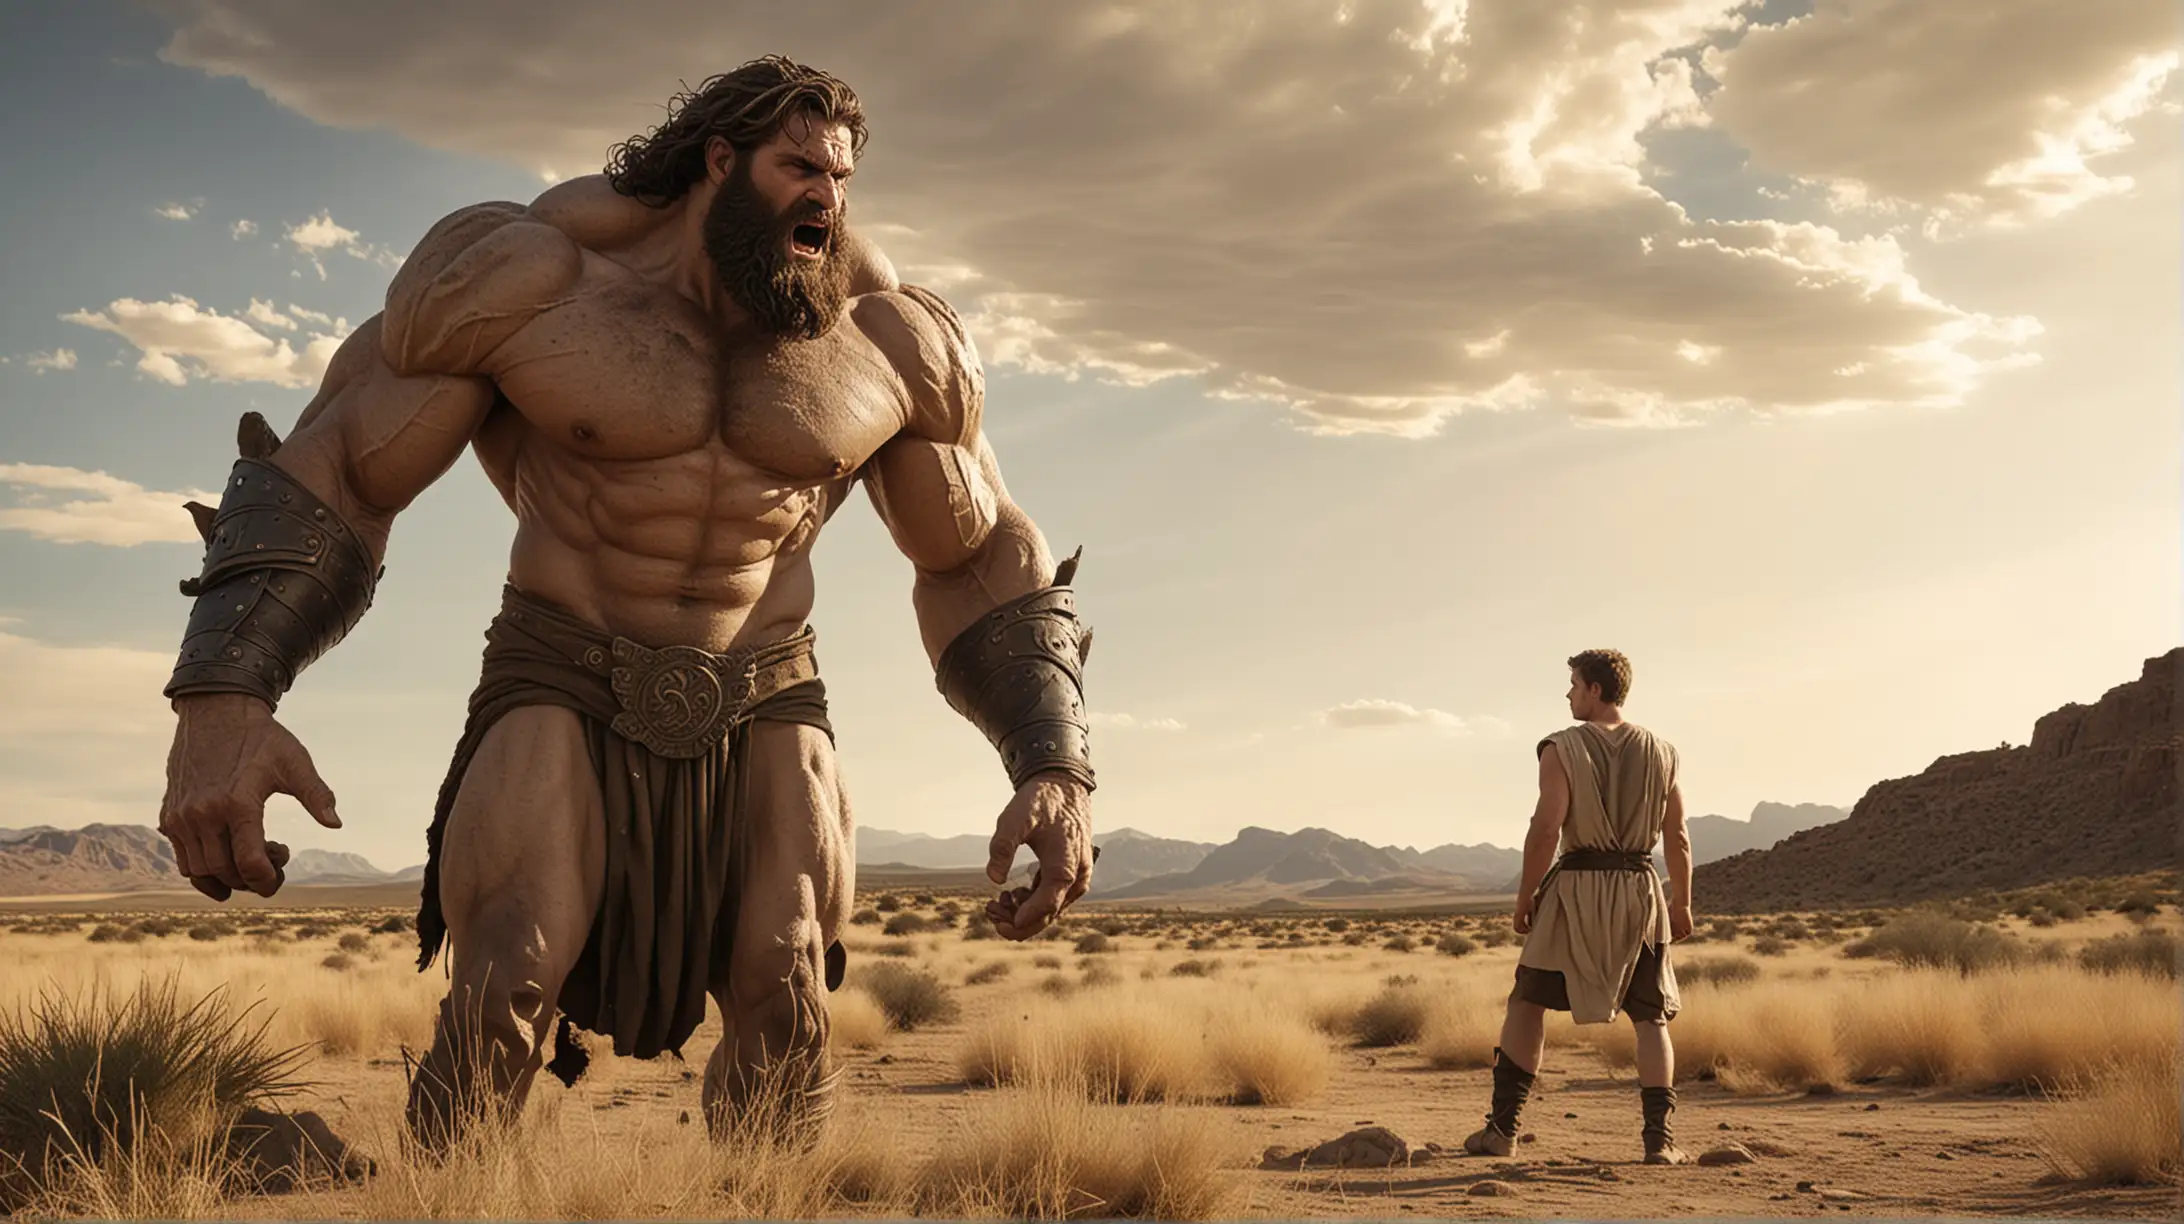 Biblical Giant Goliath Confronts Handsome Man in Desert Fields